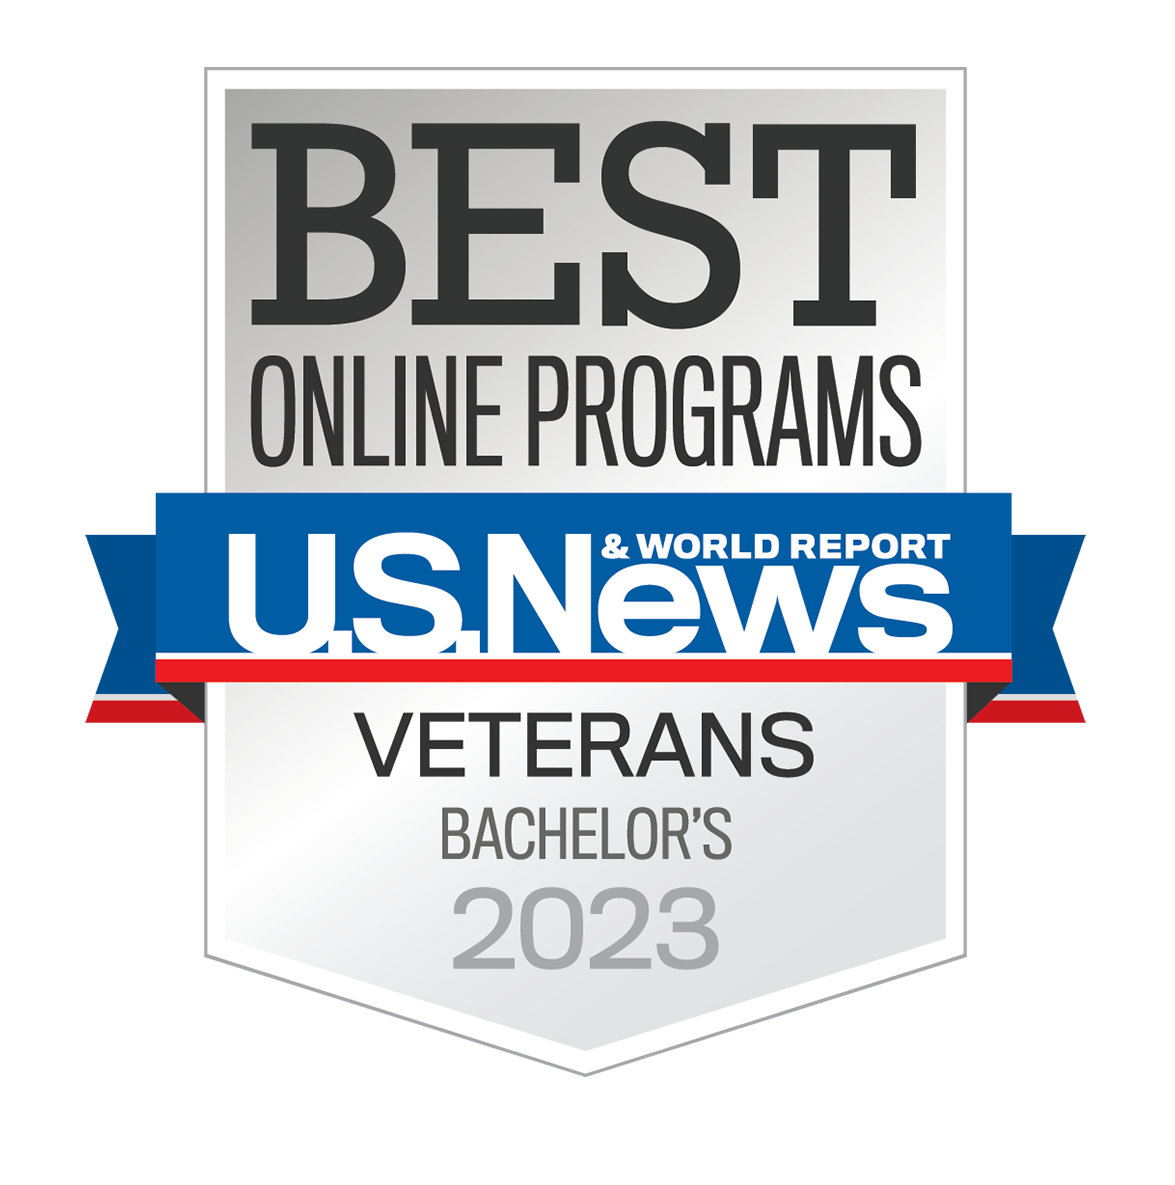 U.S. News and World reports. Best Online Programs: Veterans Bachelors 2023